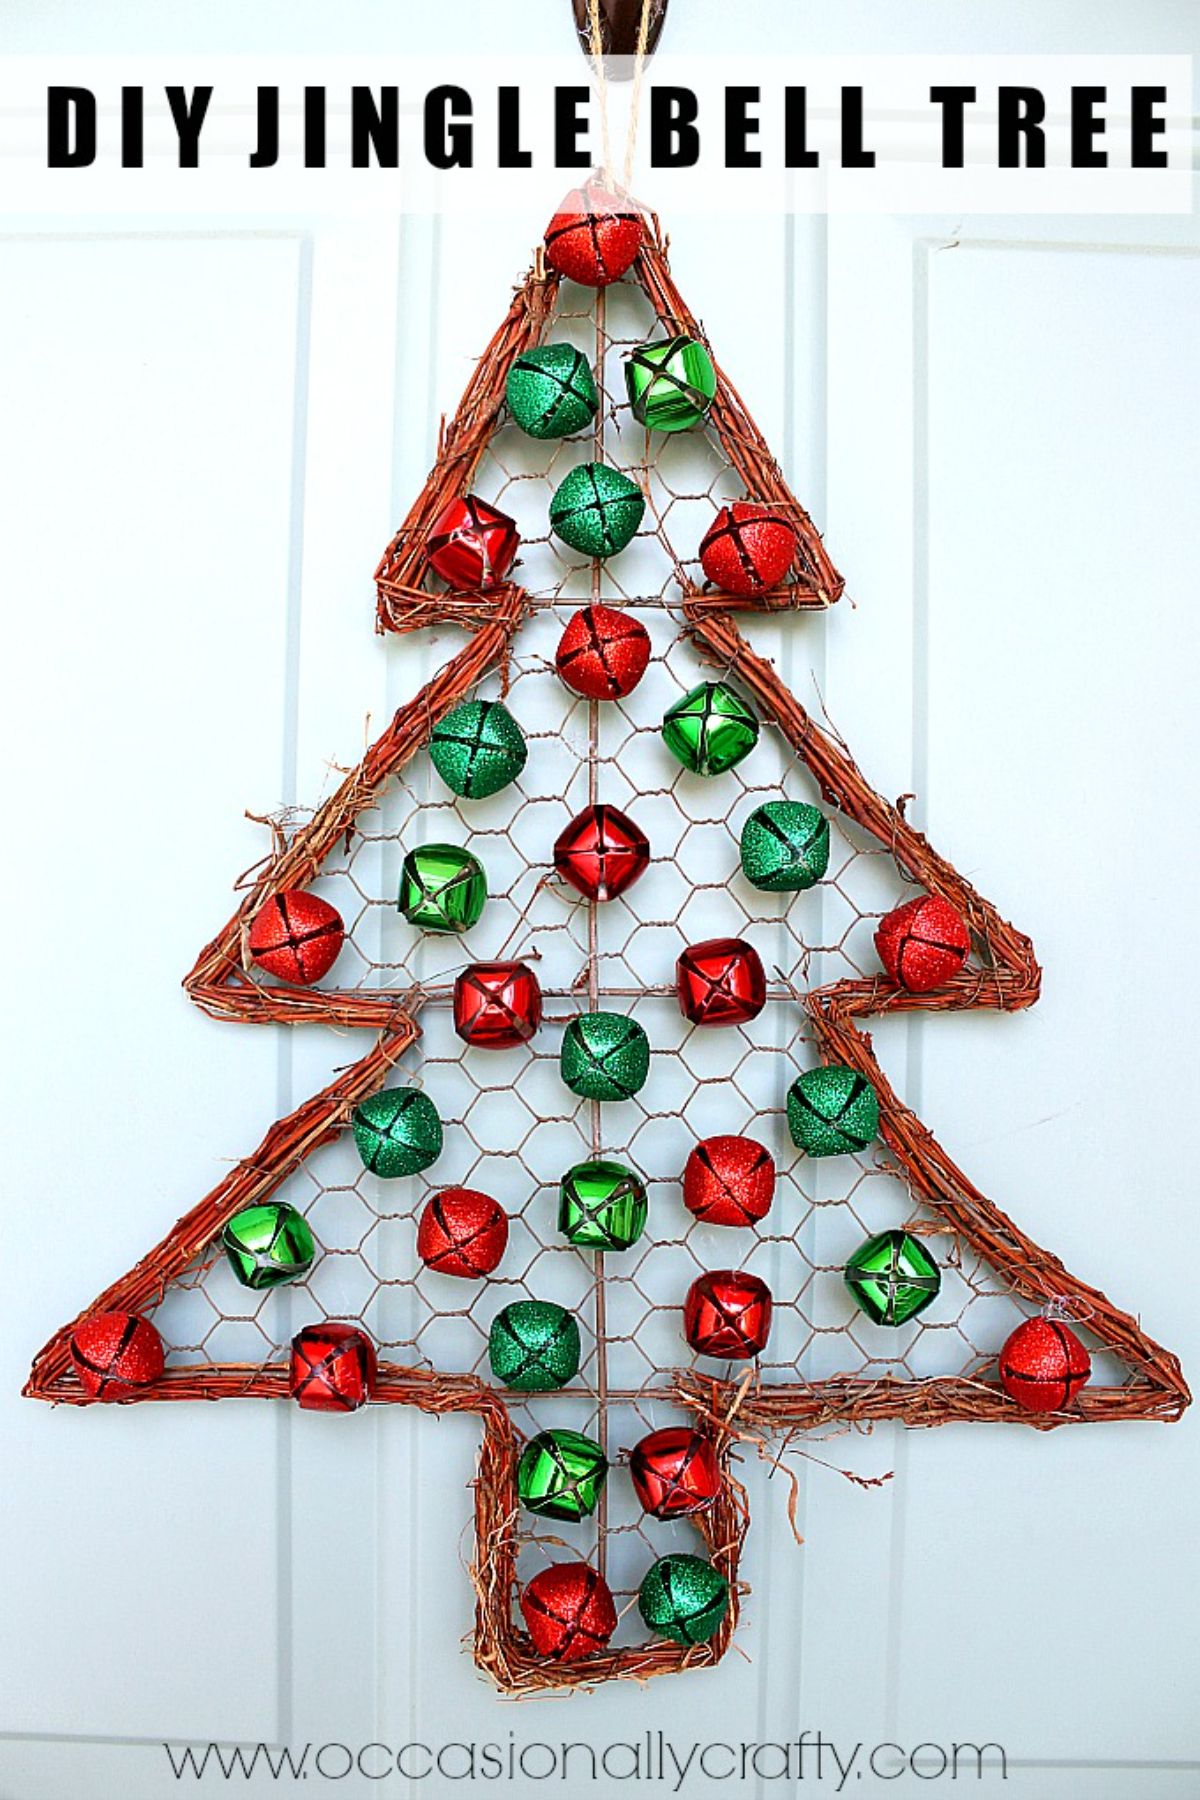 DIY Jingle Bell Tree